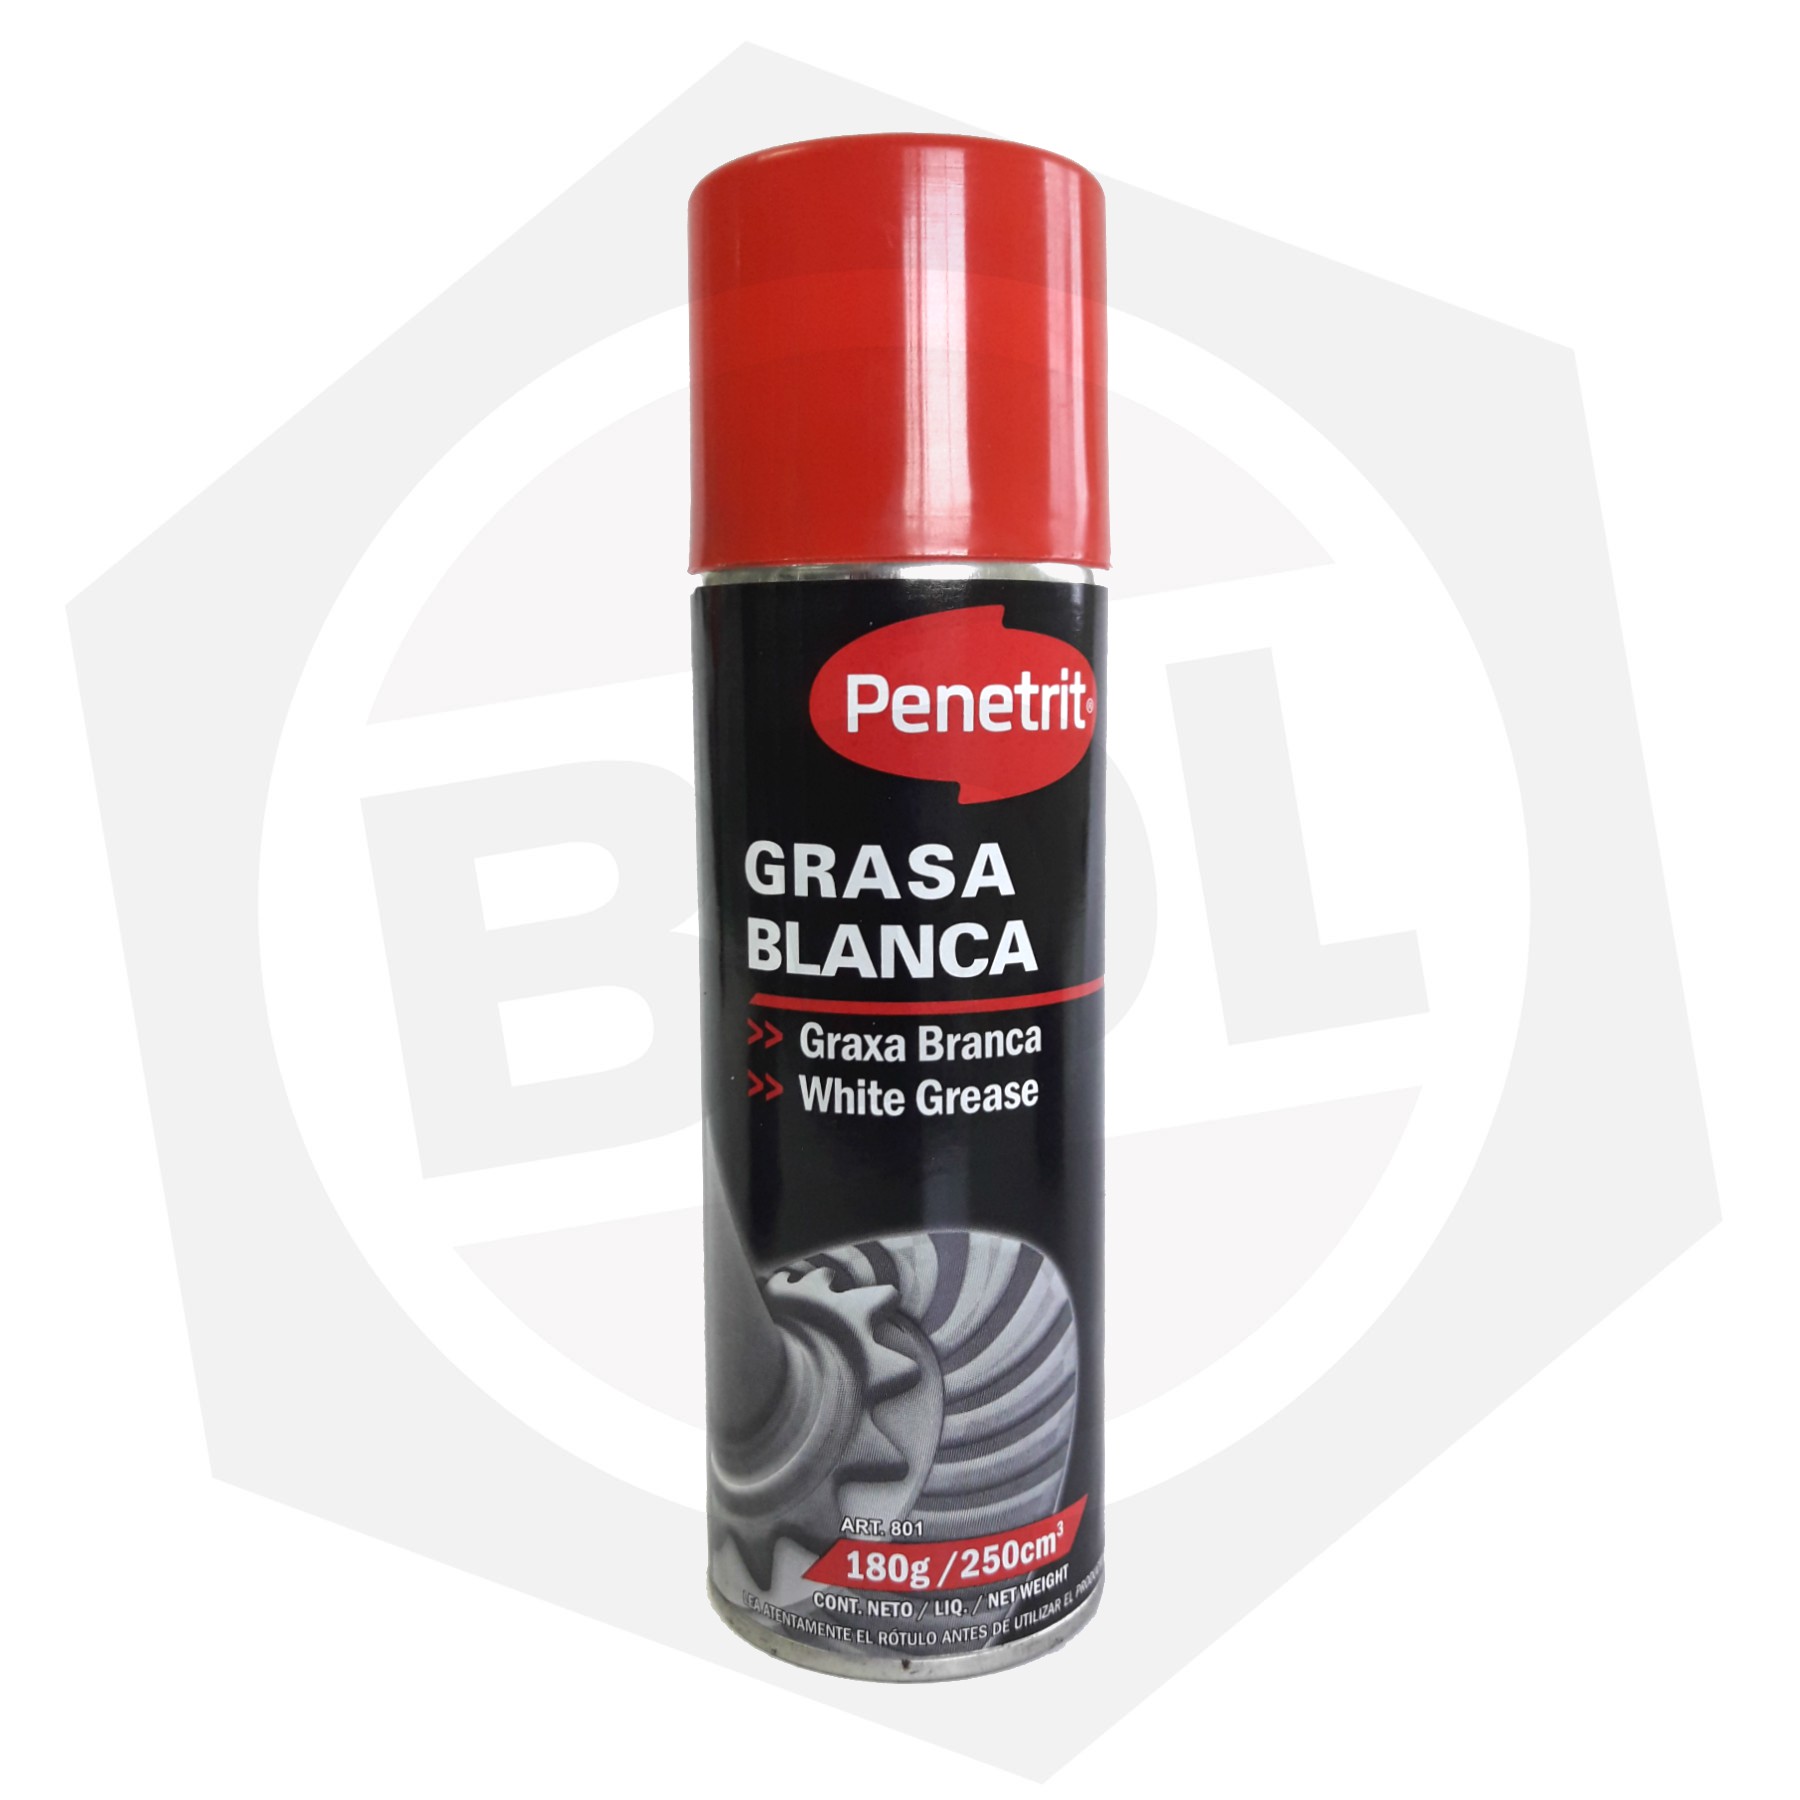 Grasa Blanca Penetrit N° 801 - 180 g / 250 cc